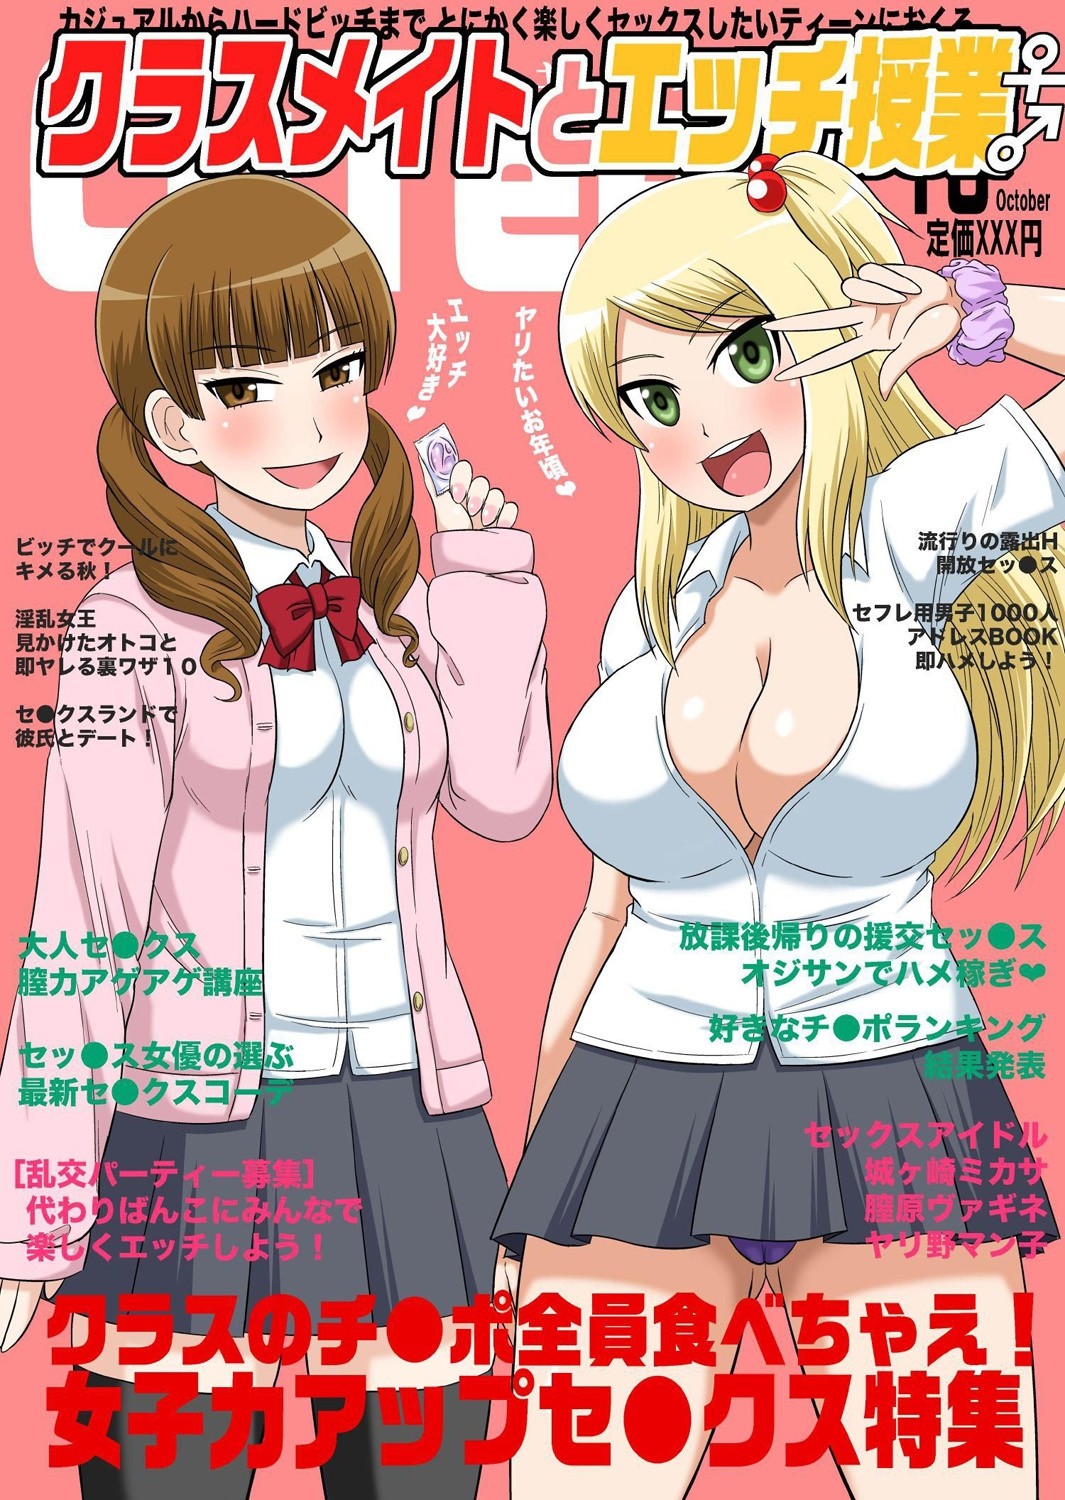 Hentai Manga Comic-Lewd Studies Between Classmates Ch.11-Read-1